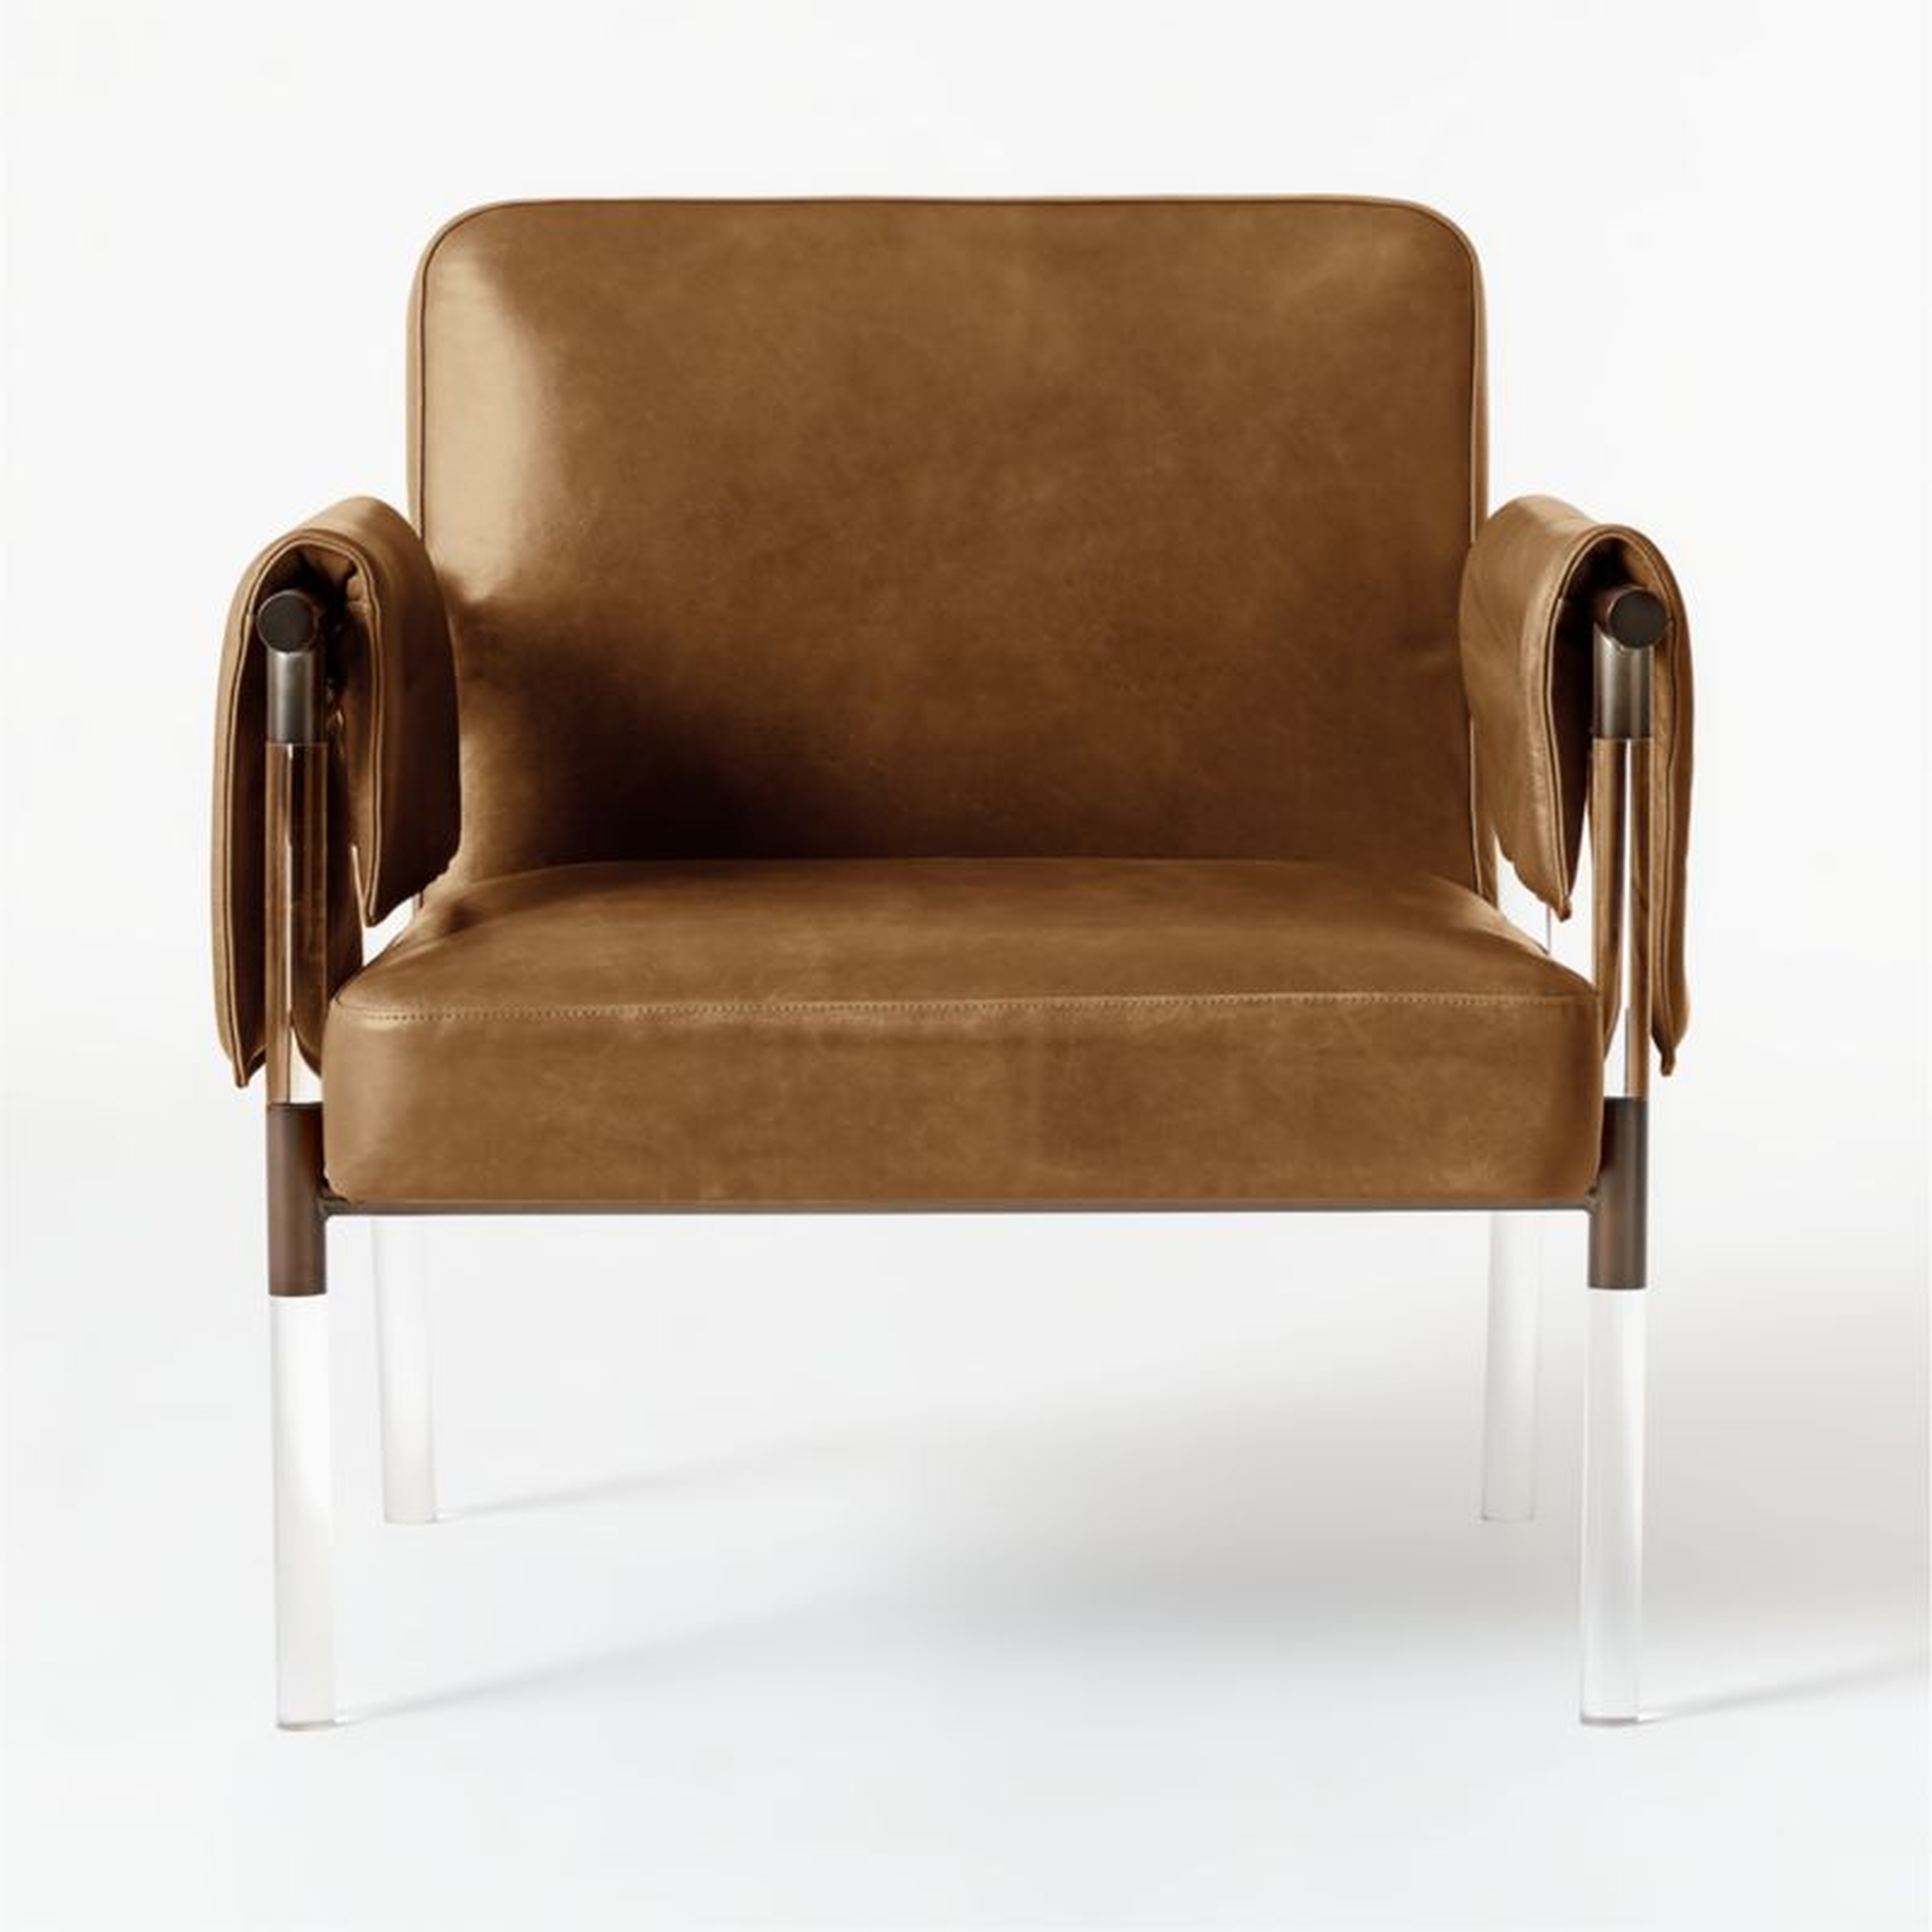 Atlas Acrylic & Tobacco Leather Chair - CB2